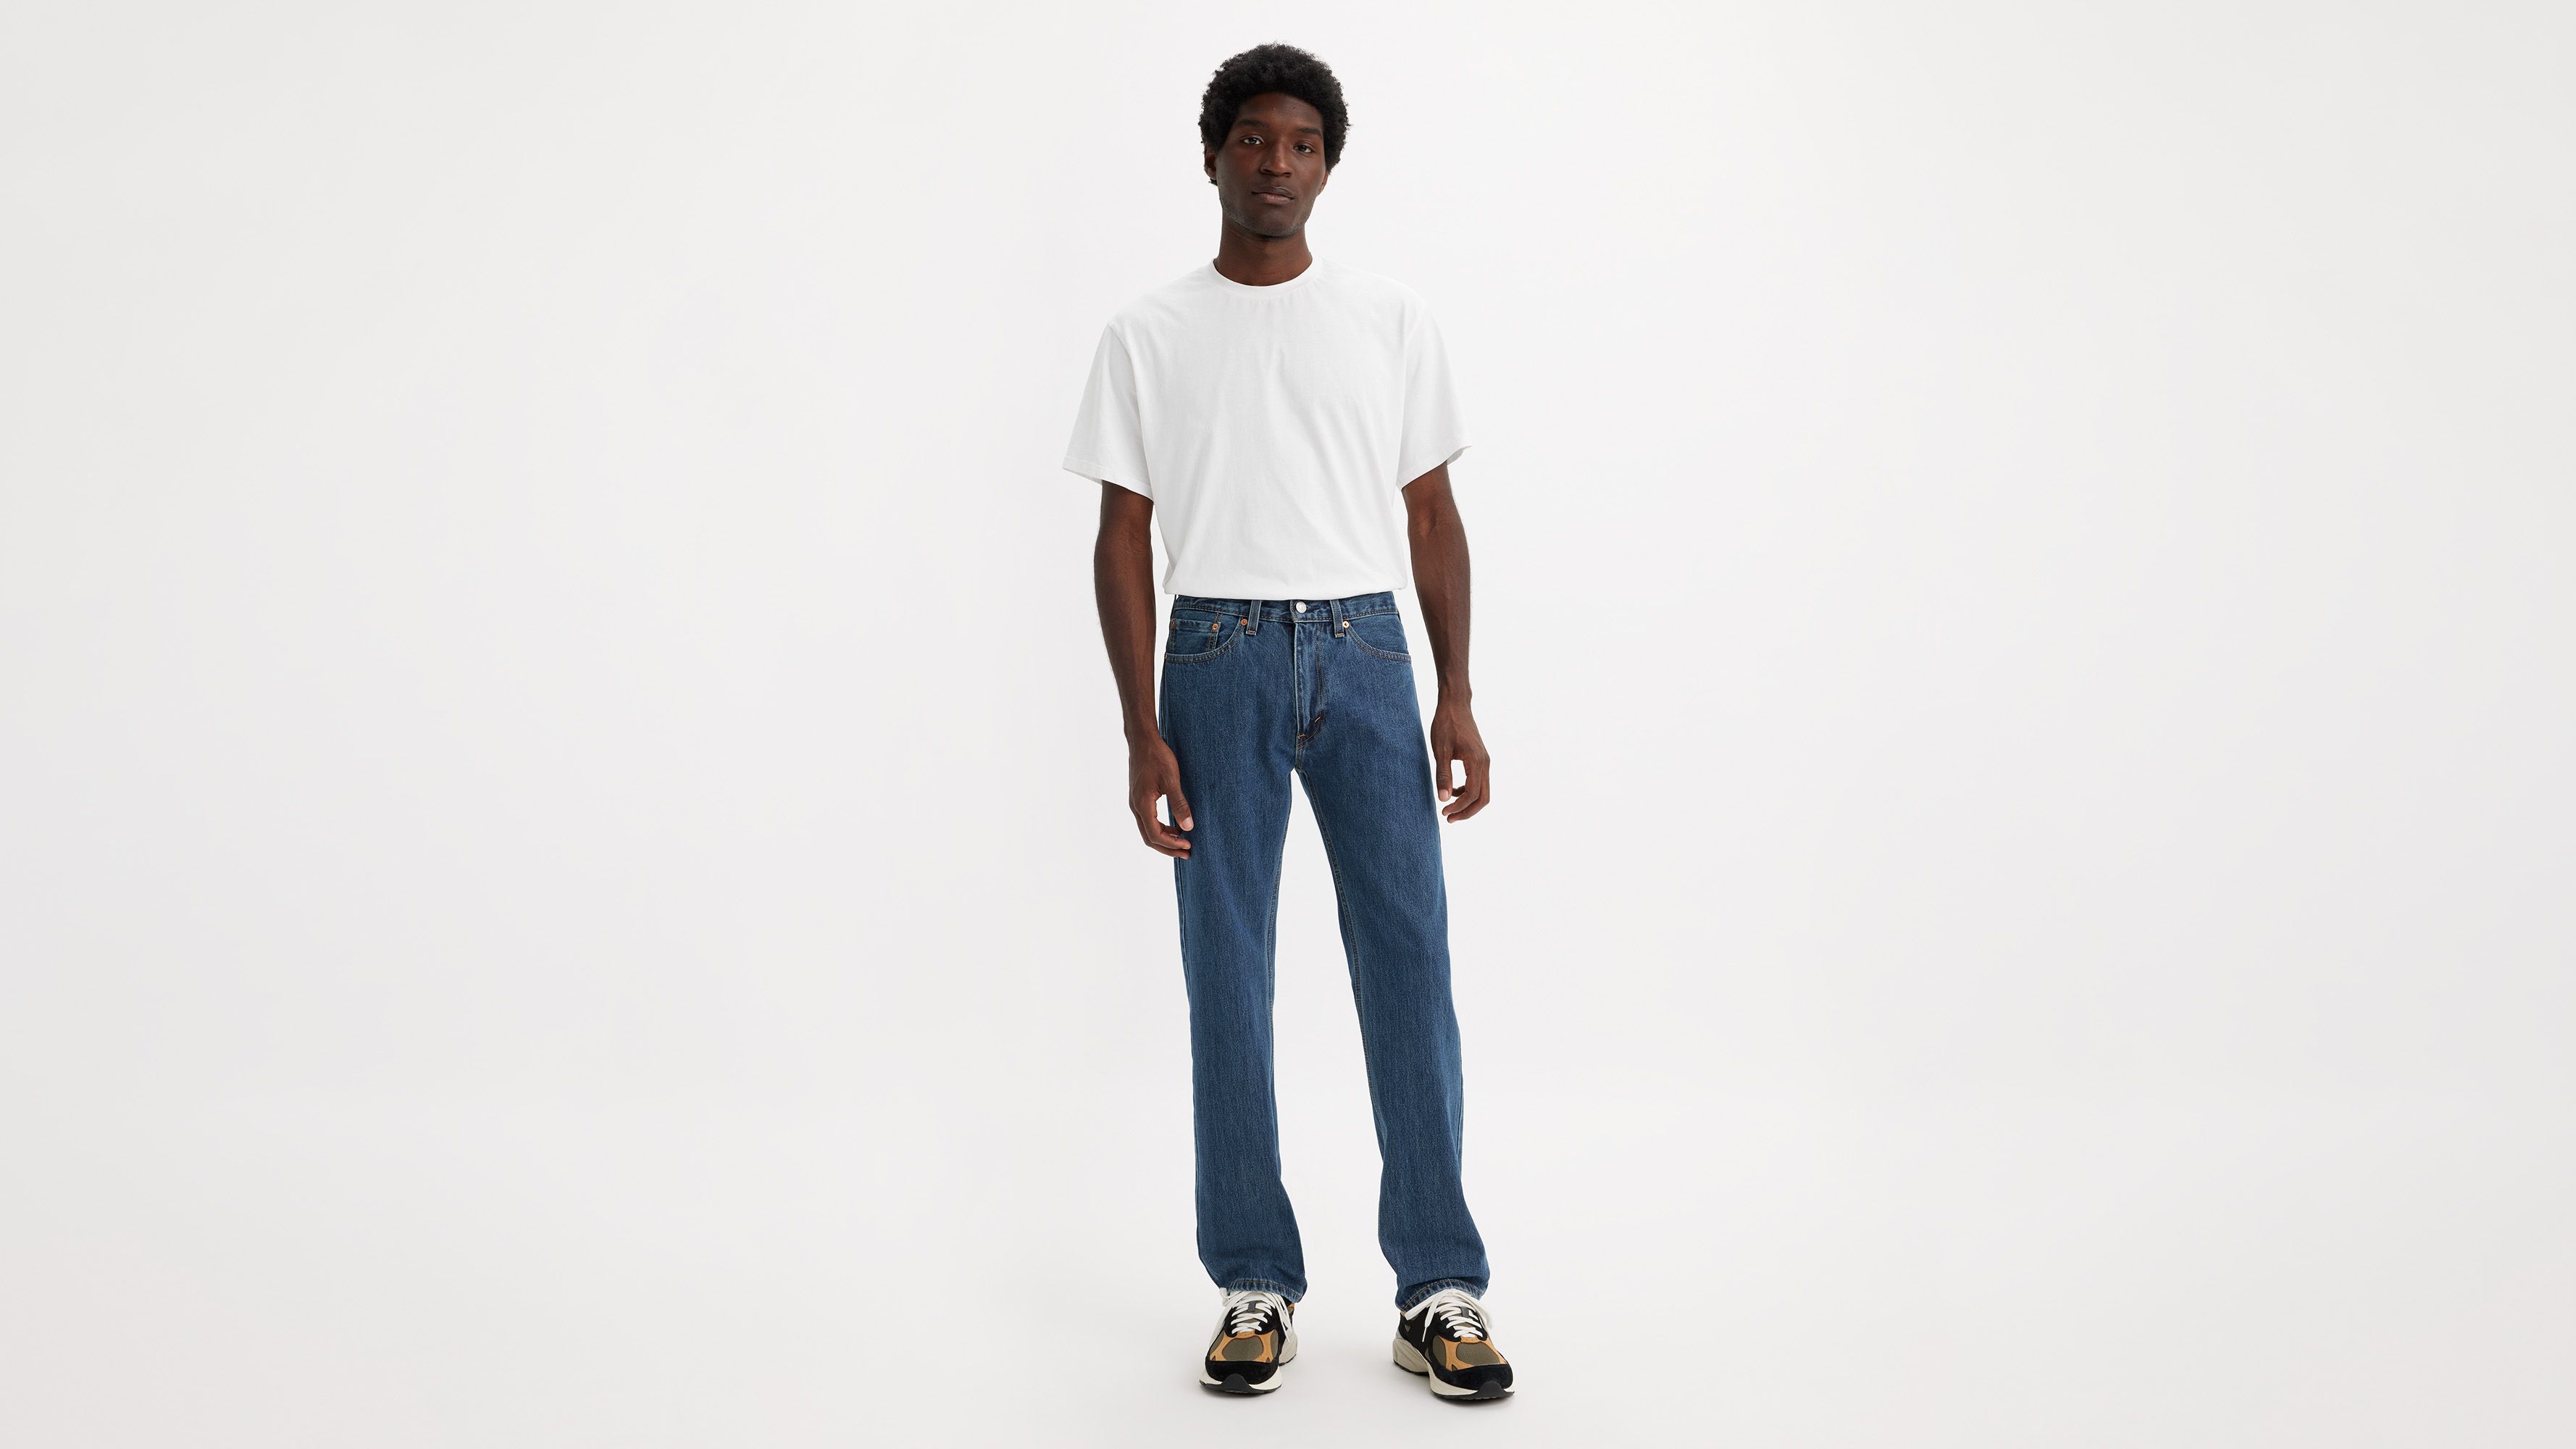 levi's black skinny jeans mens